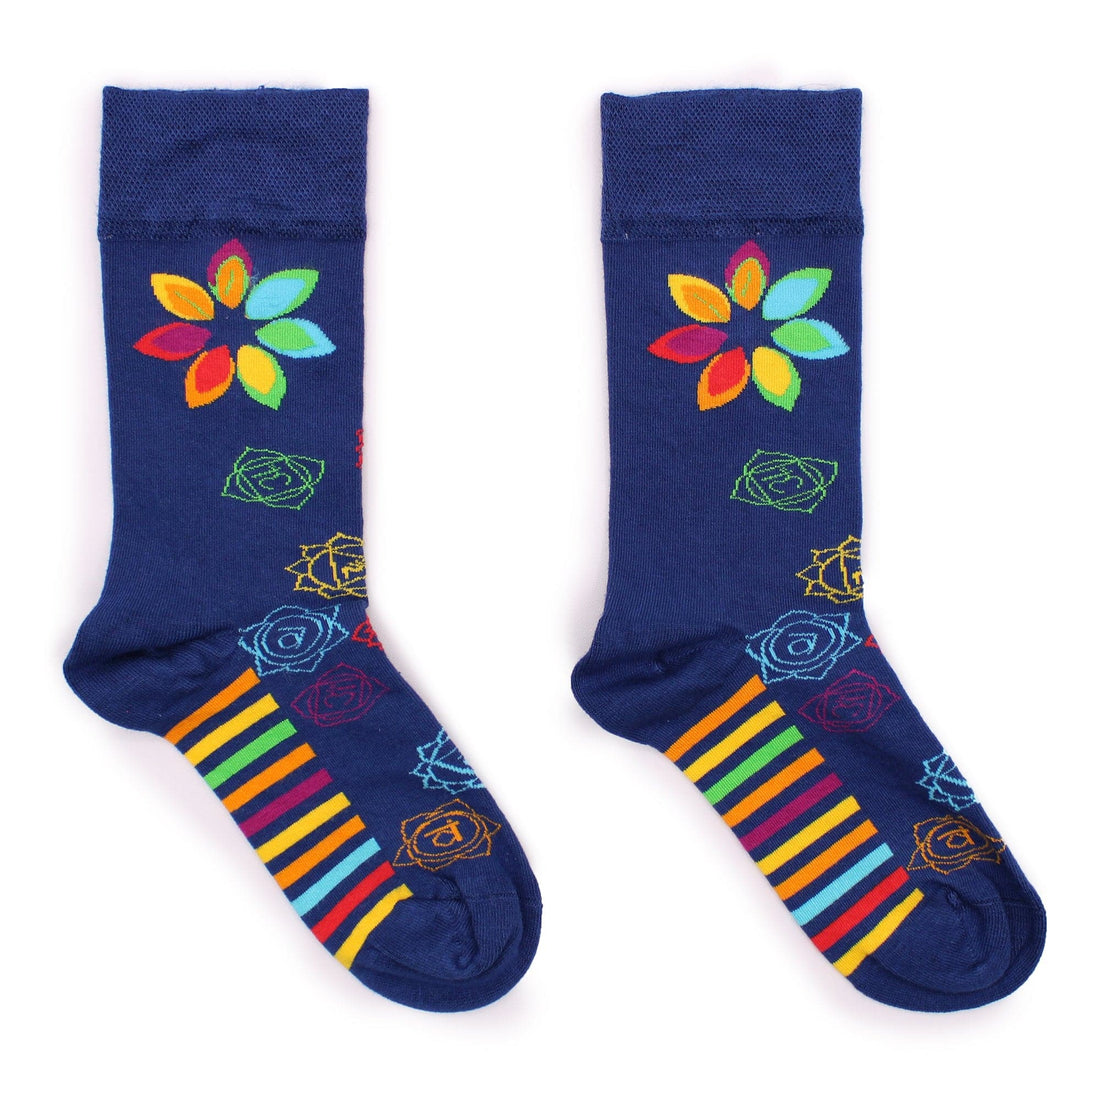 Hop Hare Bamboo Socks (41-46) - Rainbow Chakra - best price from Maltashopper.com BAMS-19M